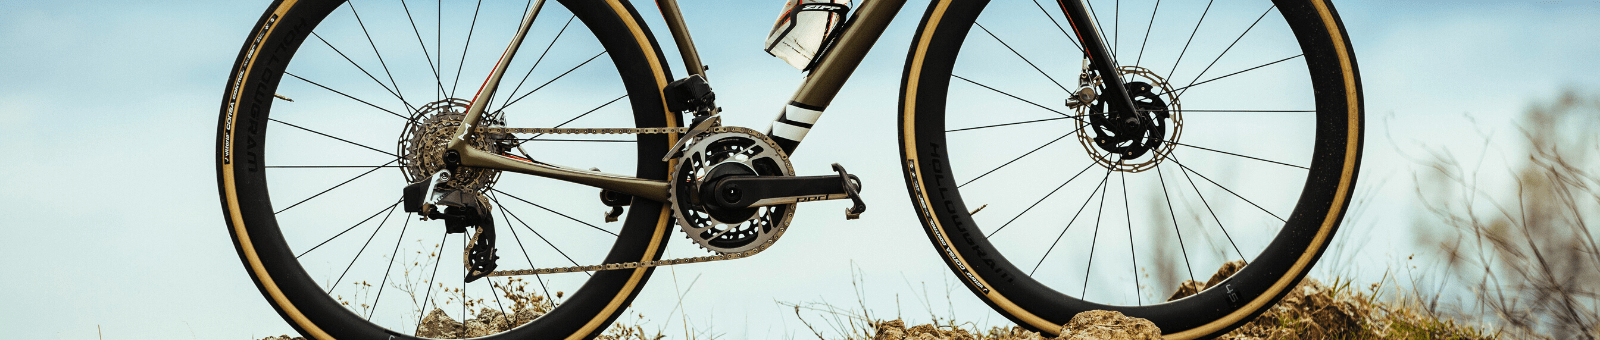 Road Bike Tires